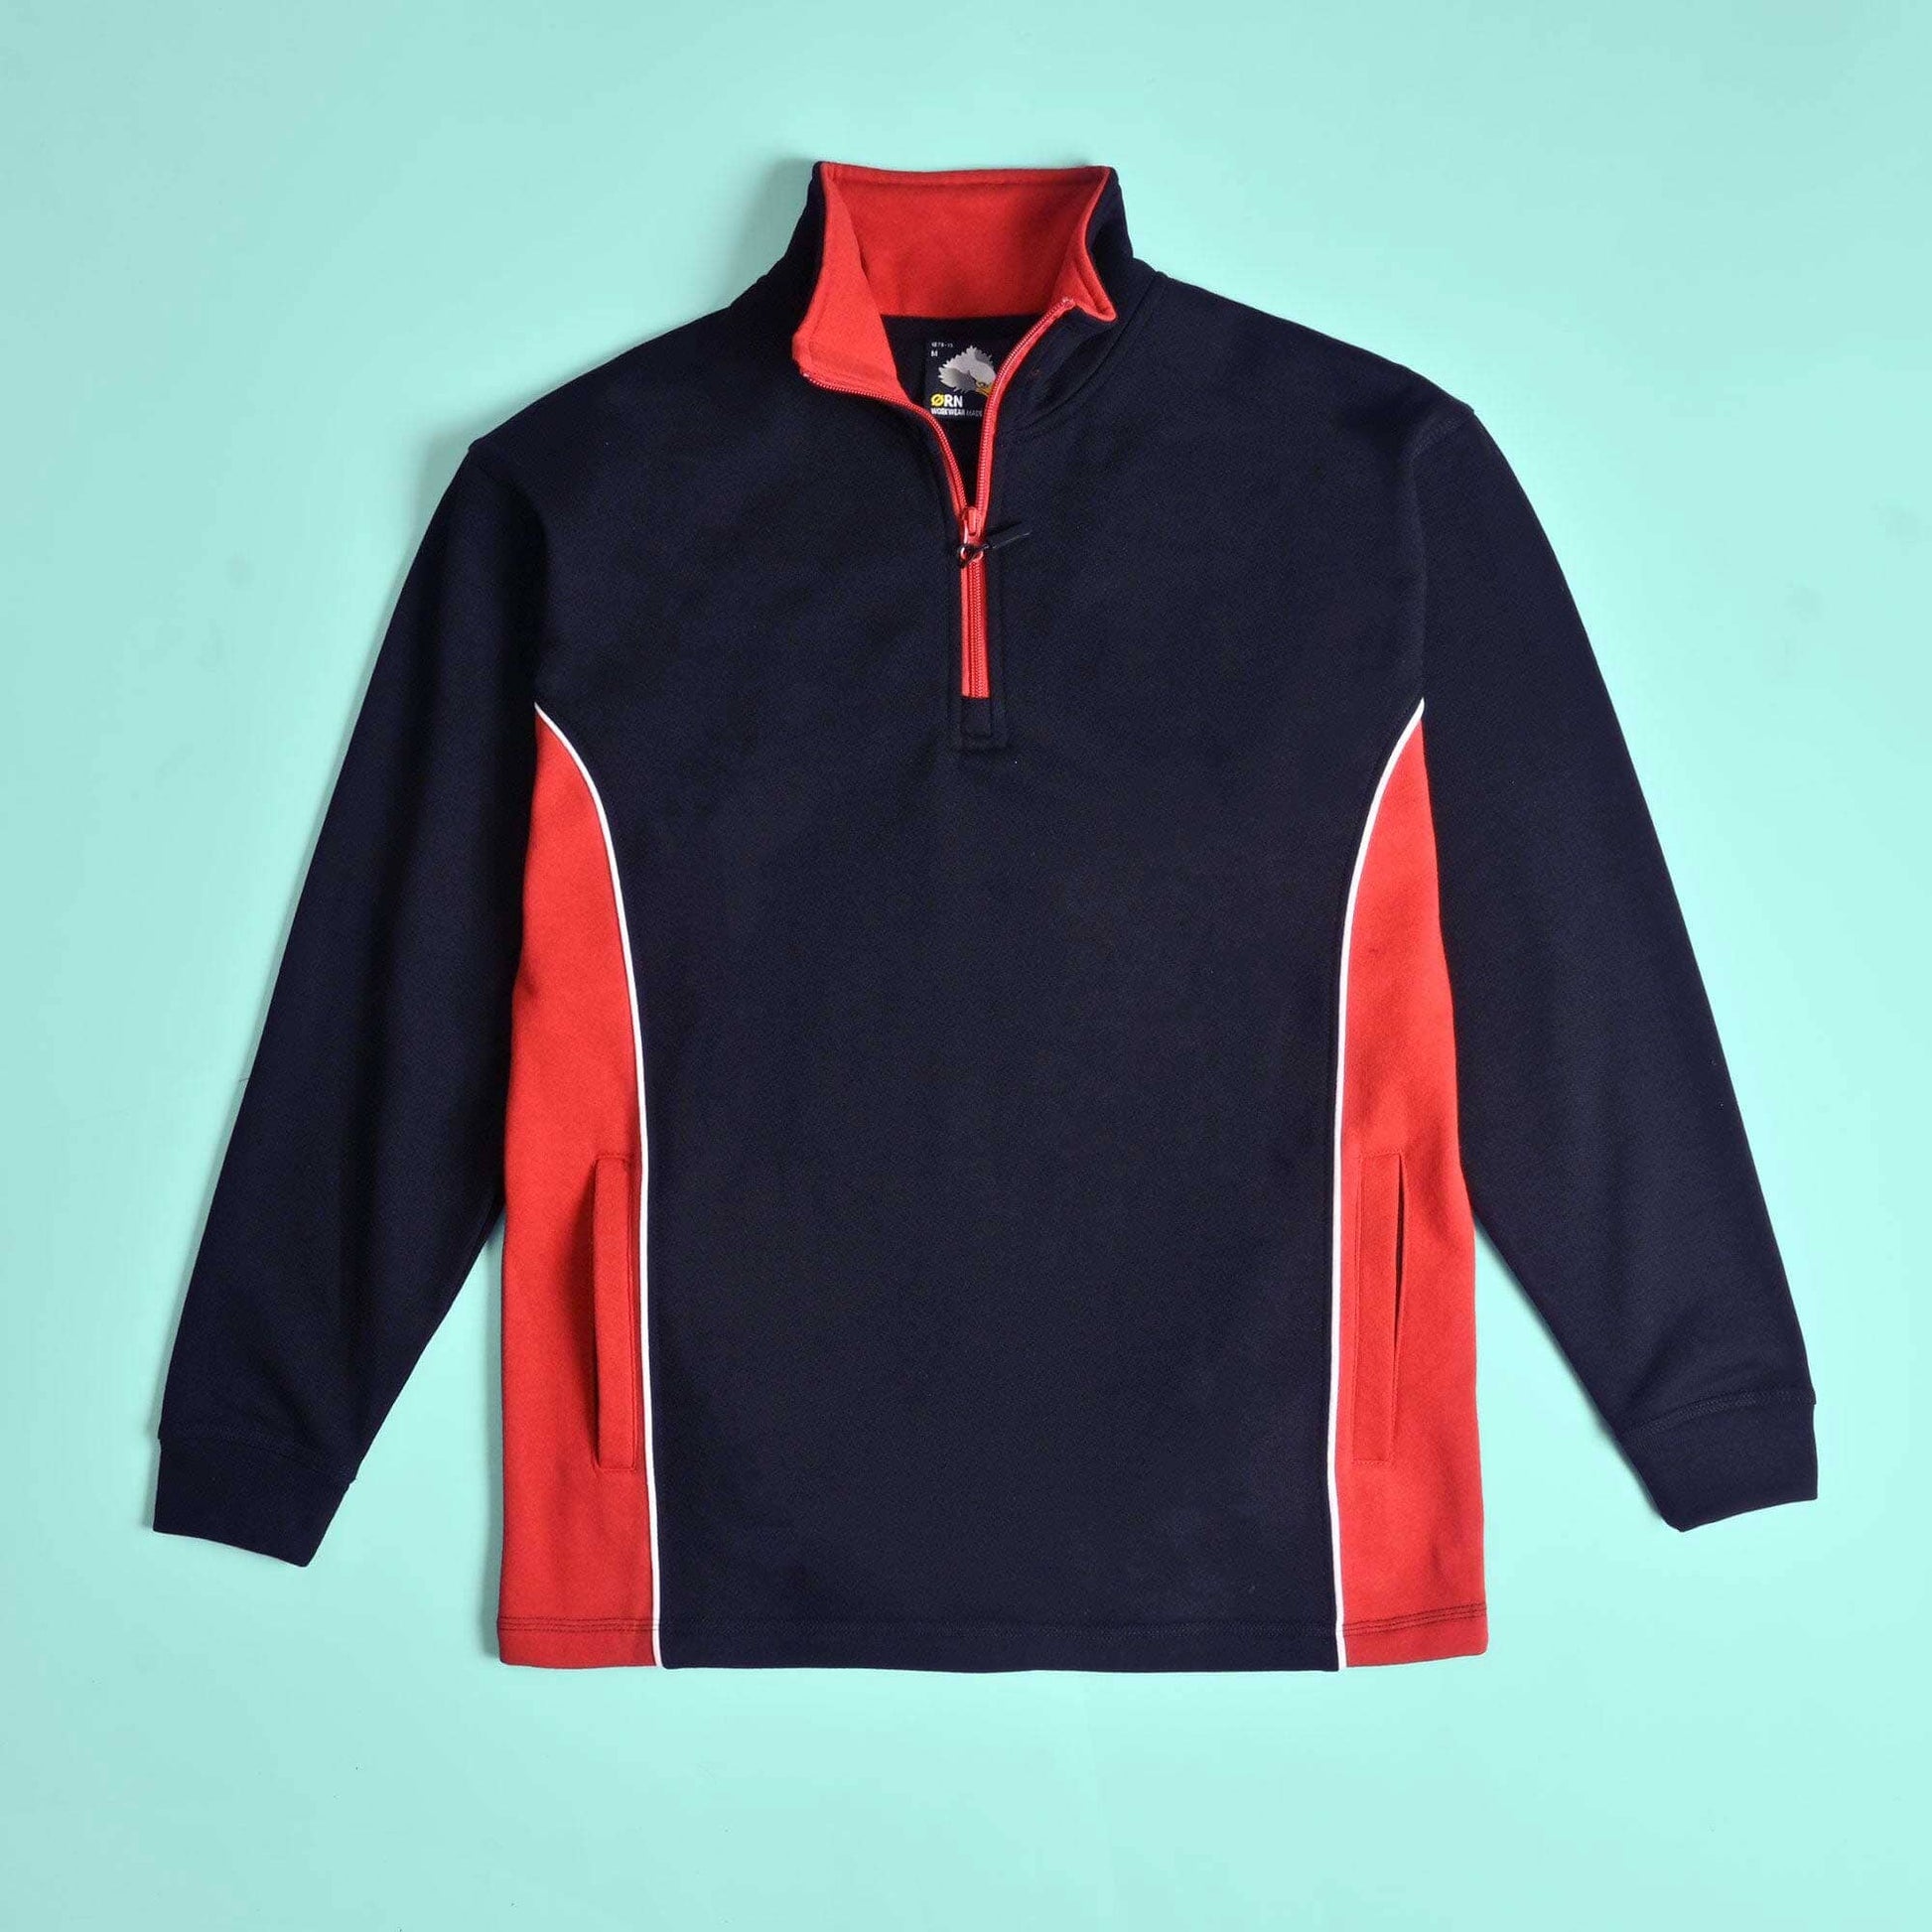 Men's Contrast Panels Quarter Zipper Fleece Sweat Shirt Minor Fault Image Navy Red XS